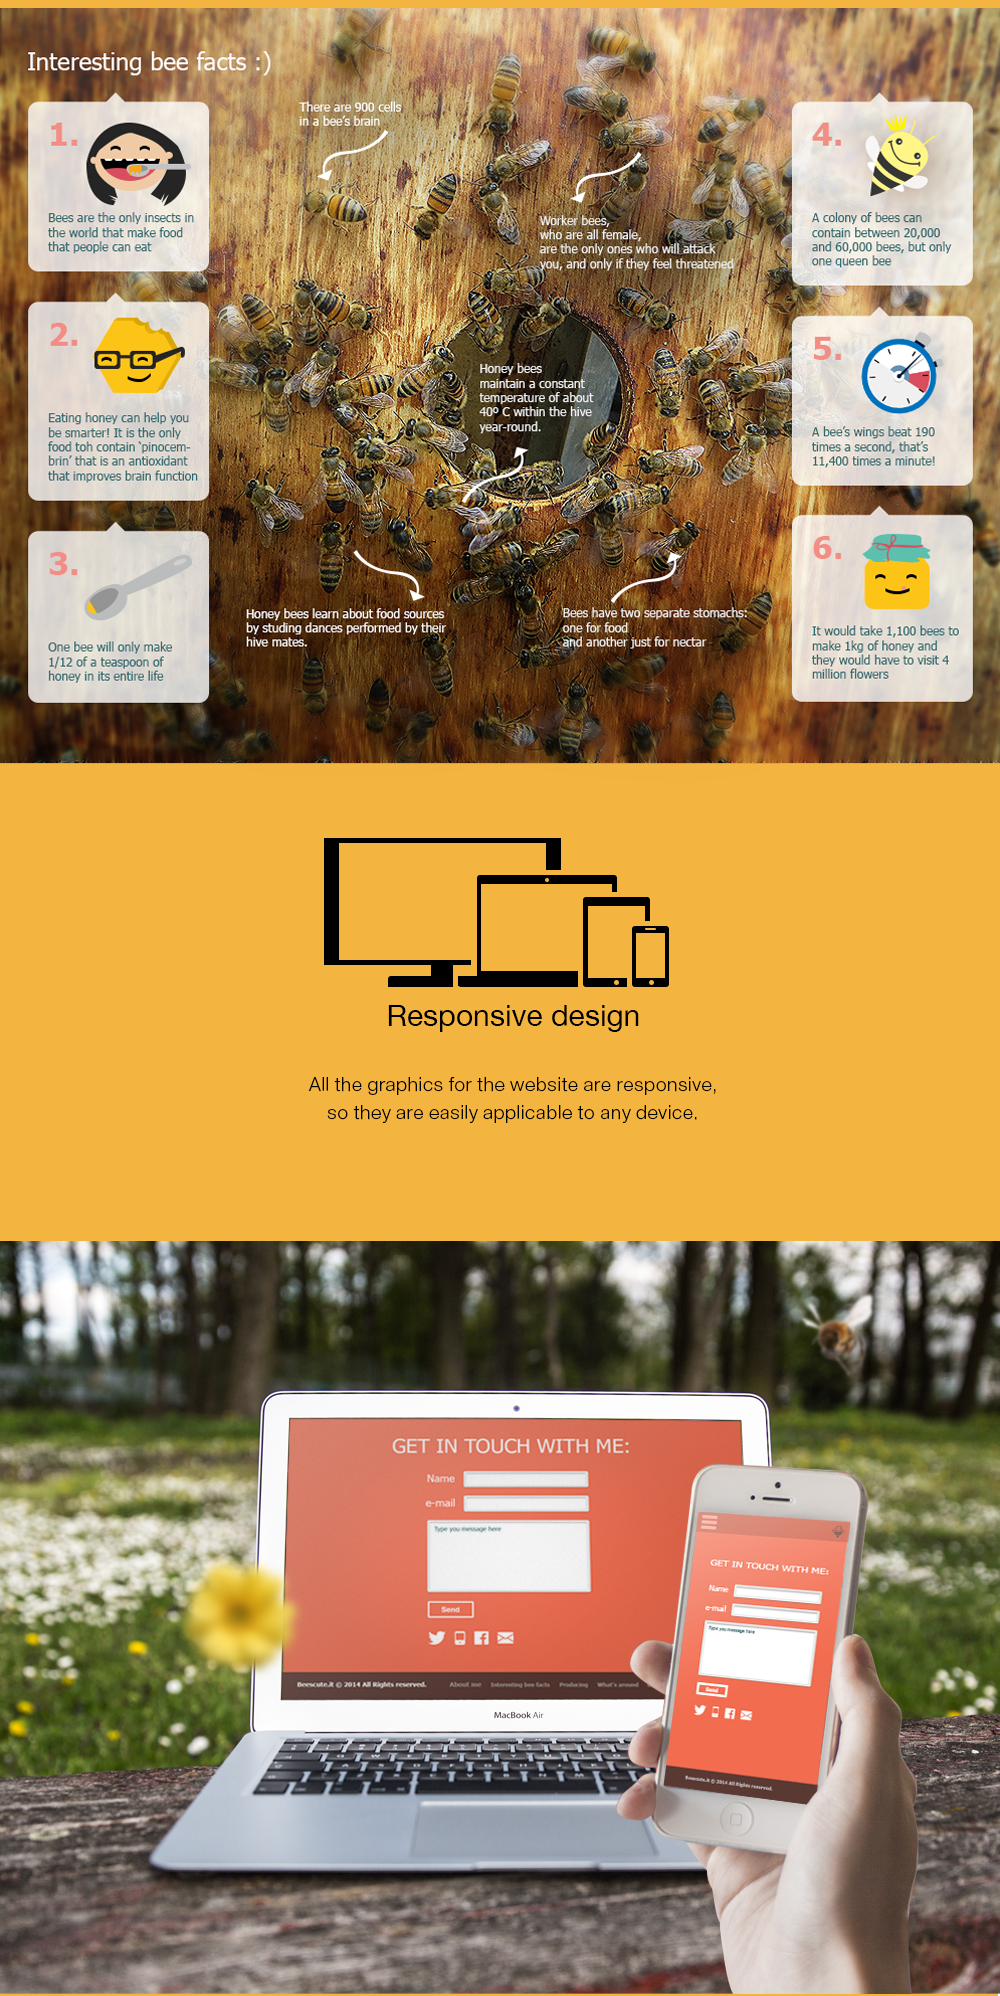 Beekeeper farm honey bees Responsive web-design cute